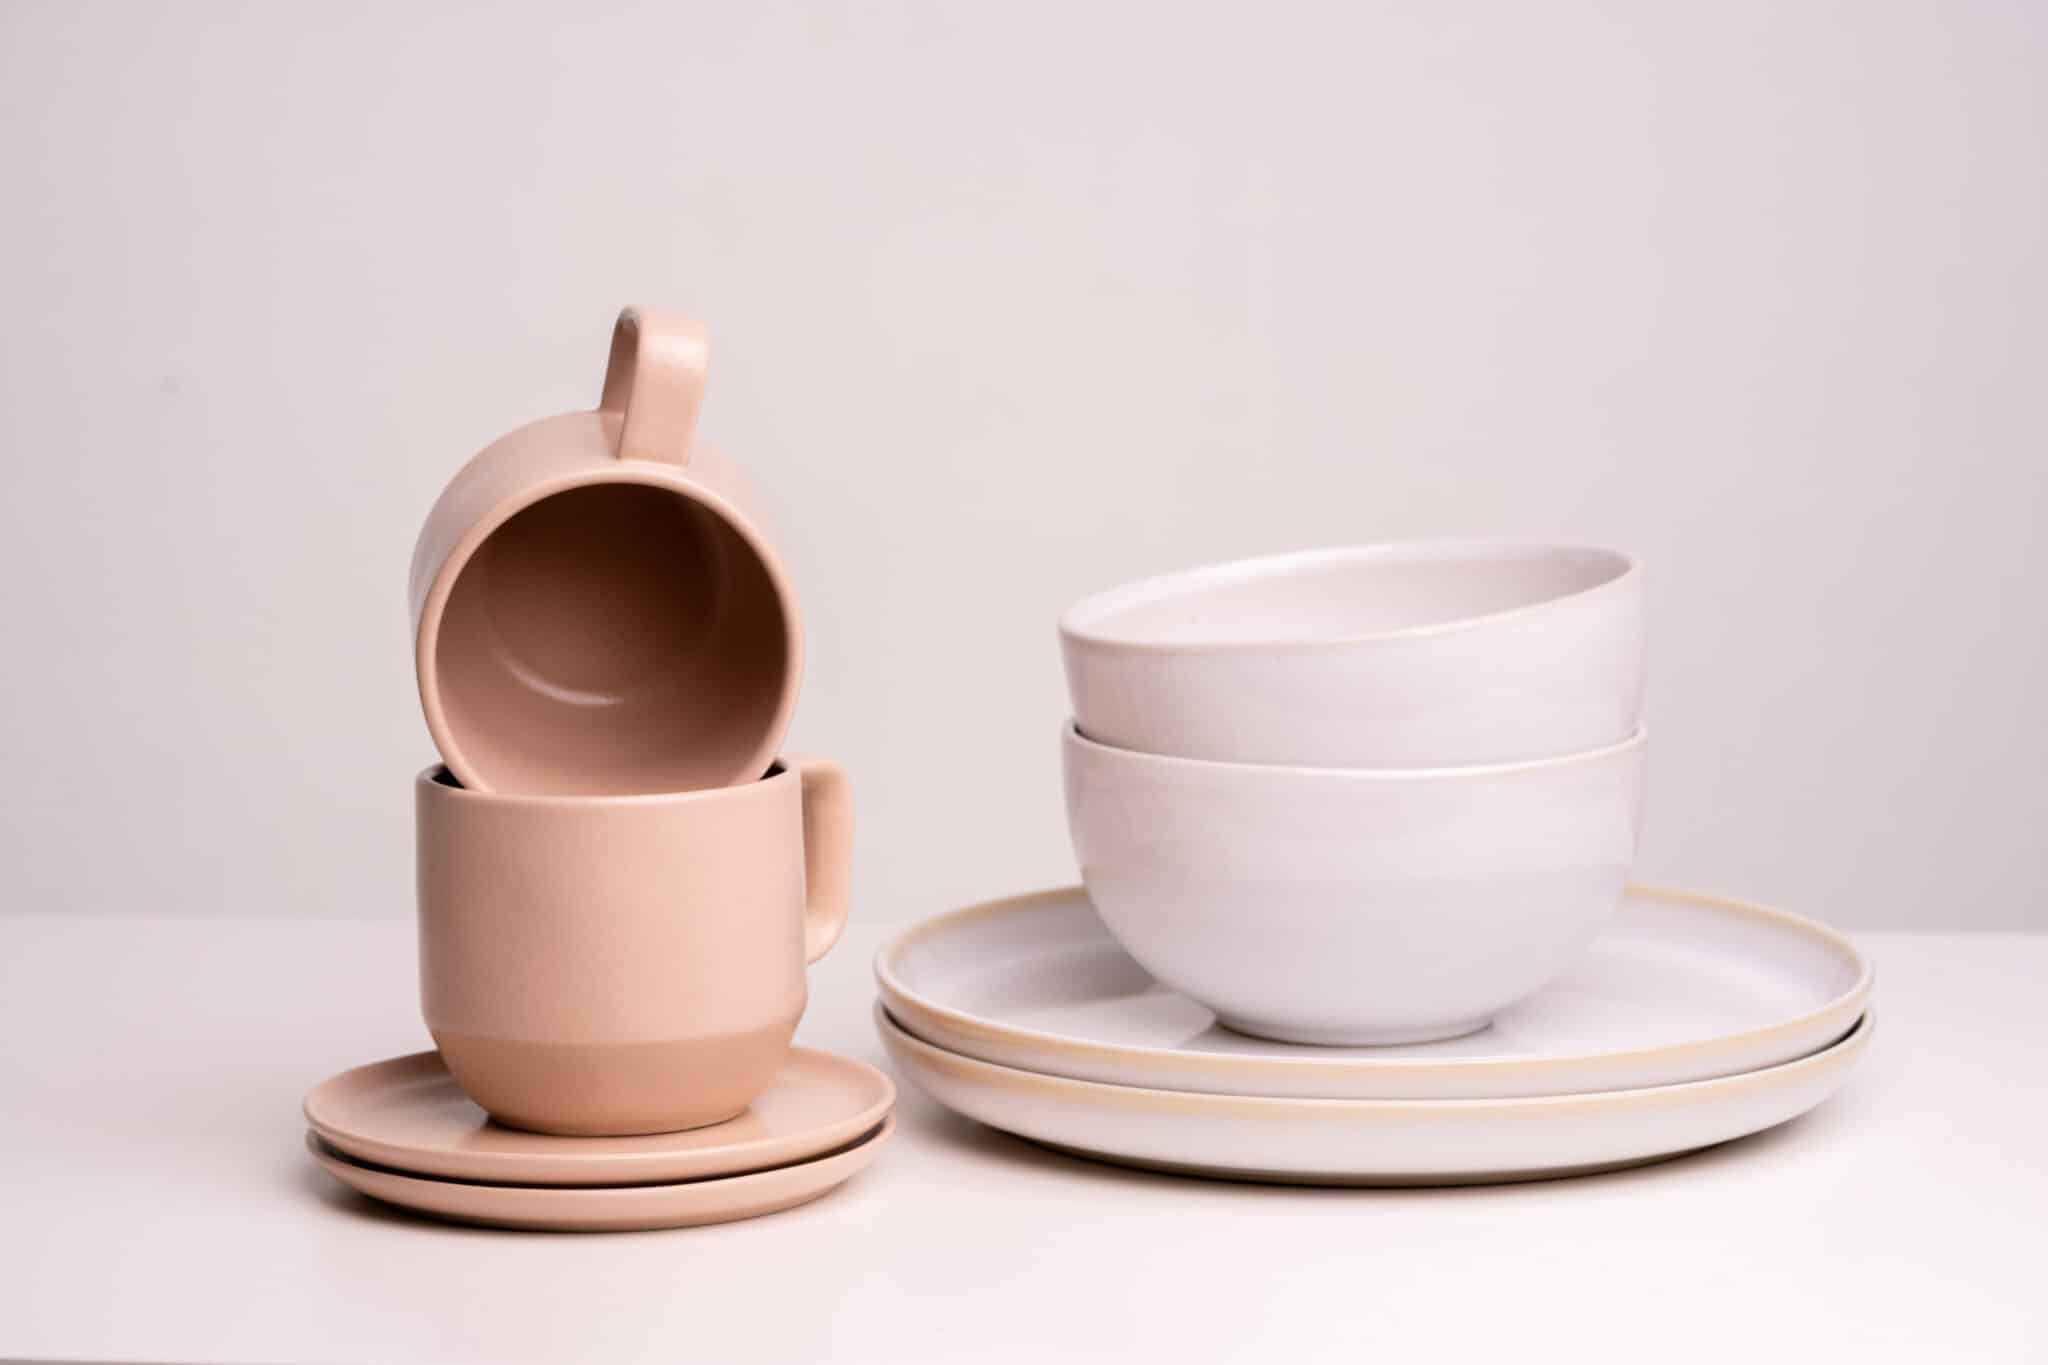 Geschirr Set für 2 Personen, Keramik Bowl, Rosa Tasse, Tapas Teller, großer Keramik Teller